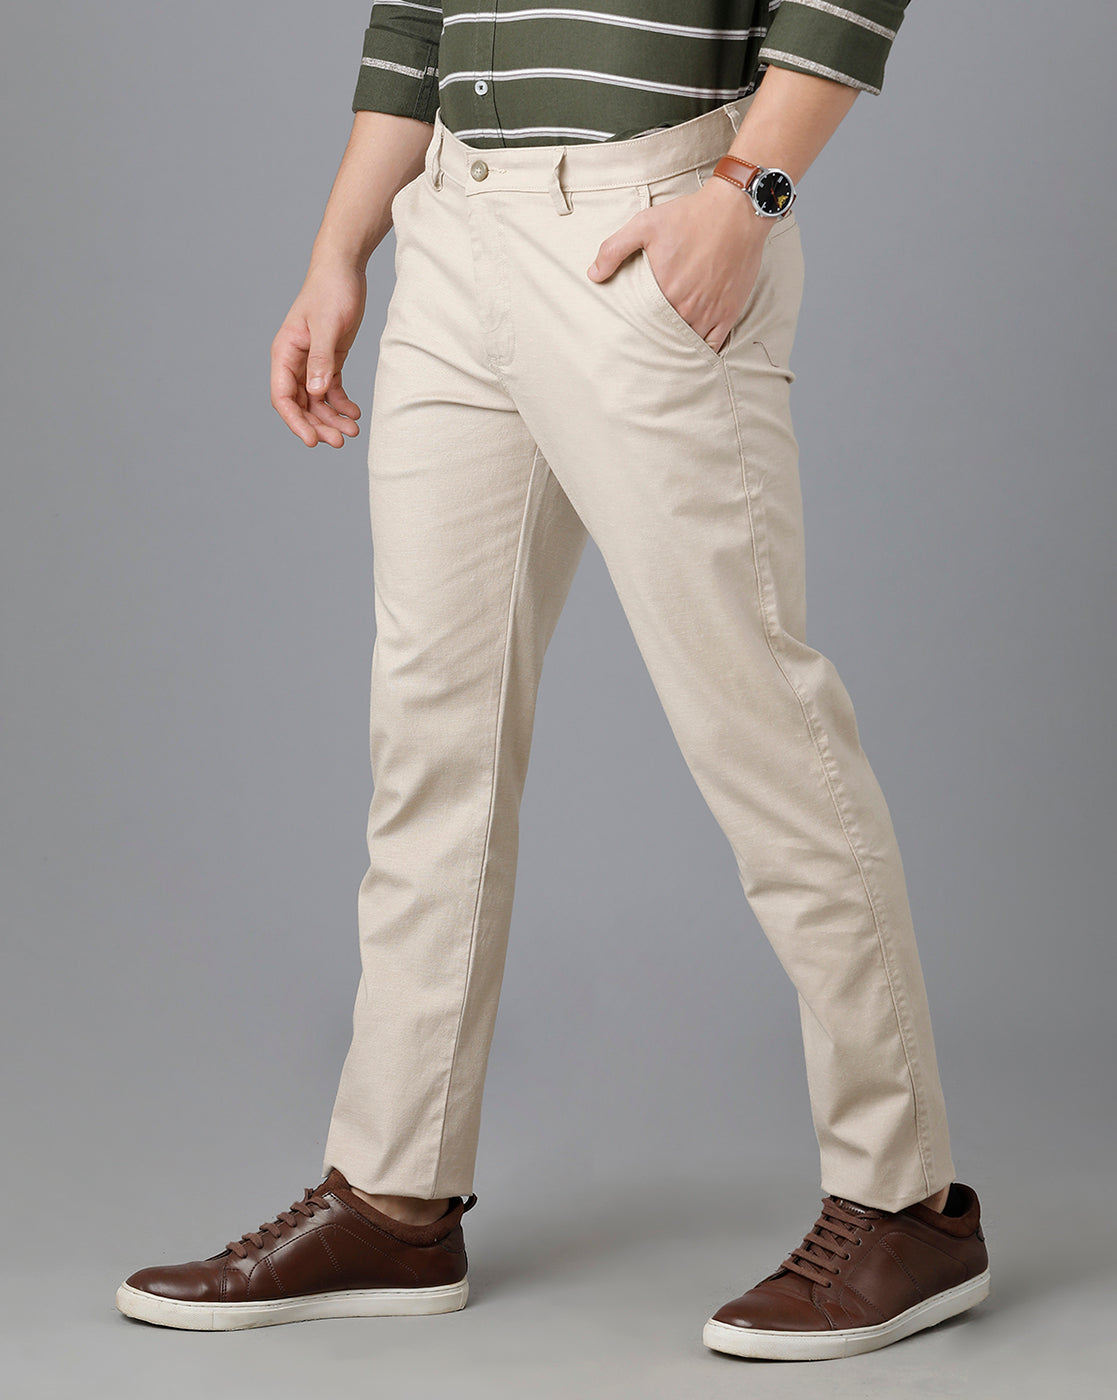 Classic Polo Mens Cotton Solid Slim Fit Beige Color Trouser | Tn2-06 A